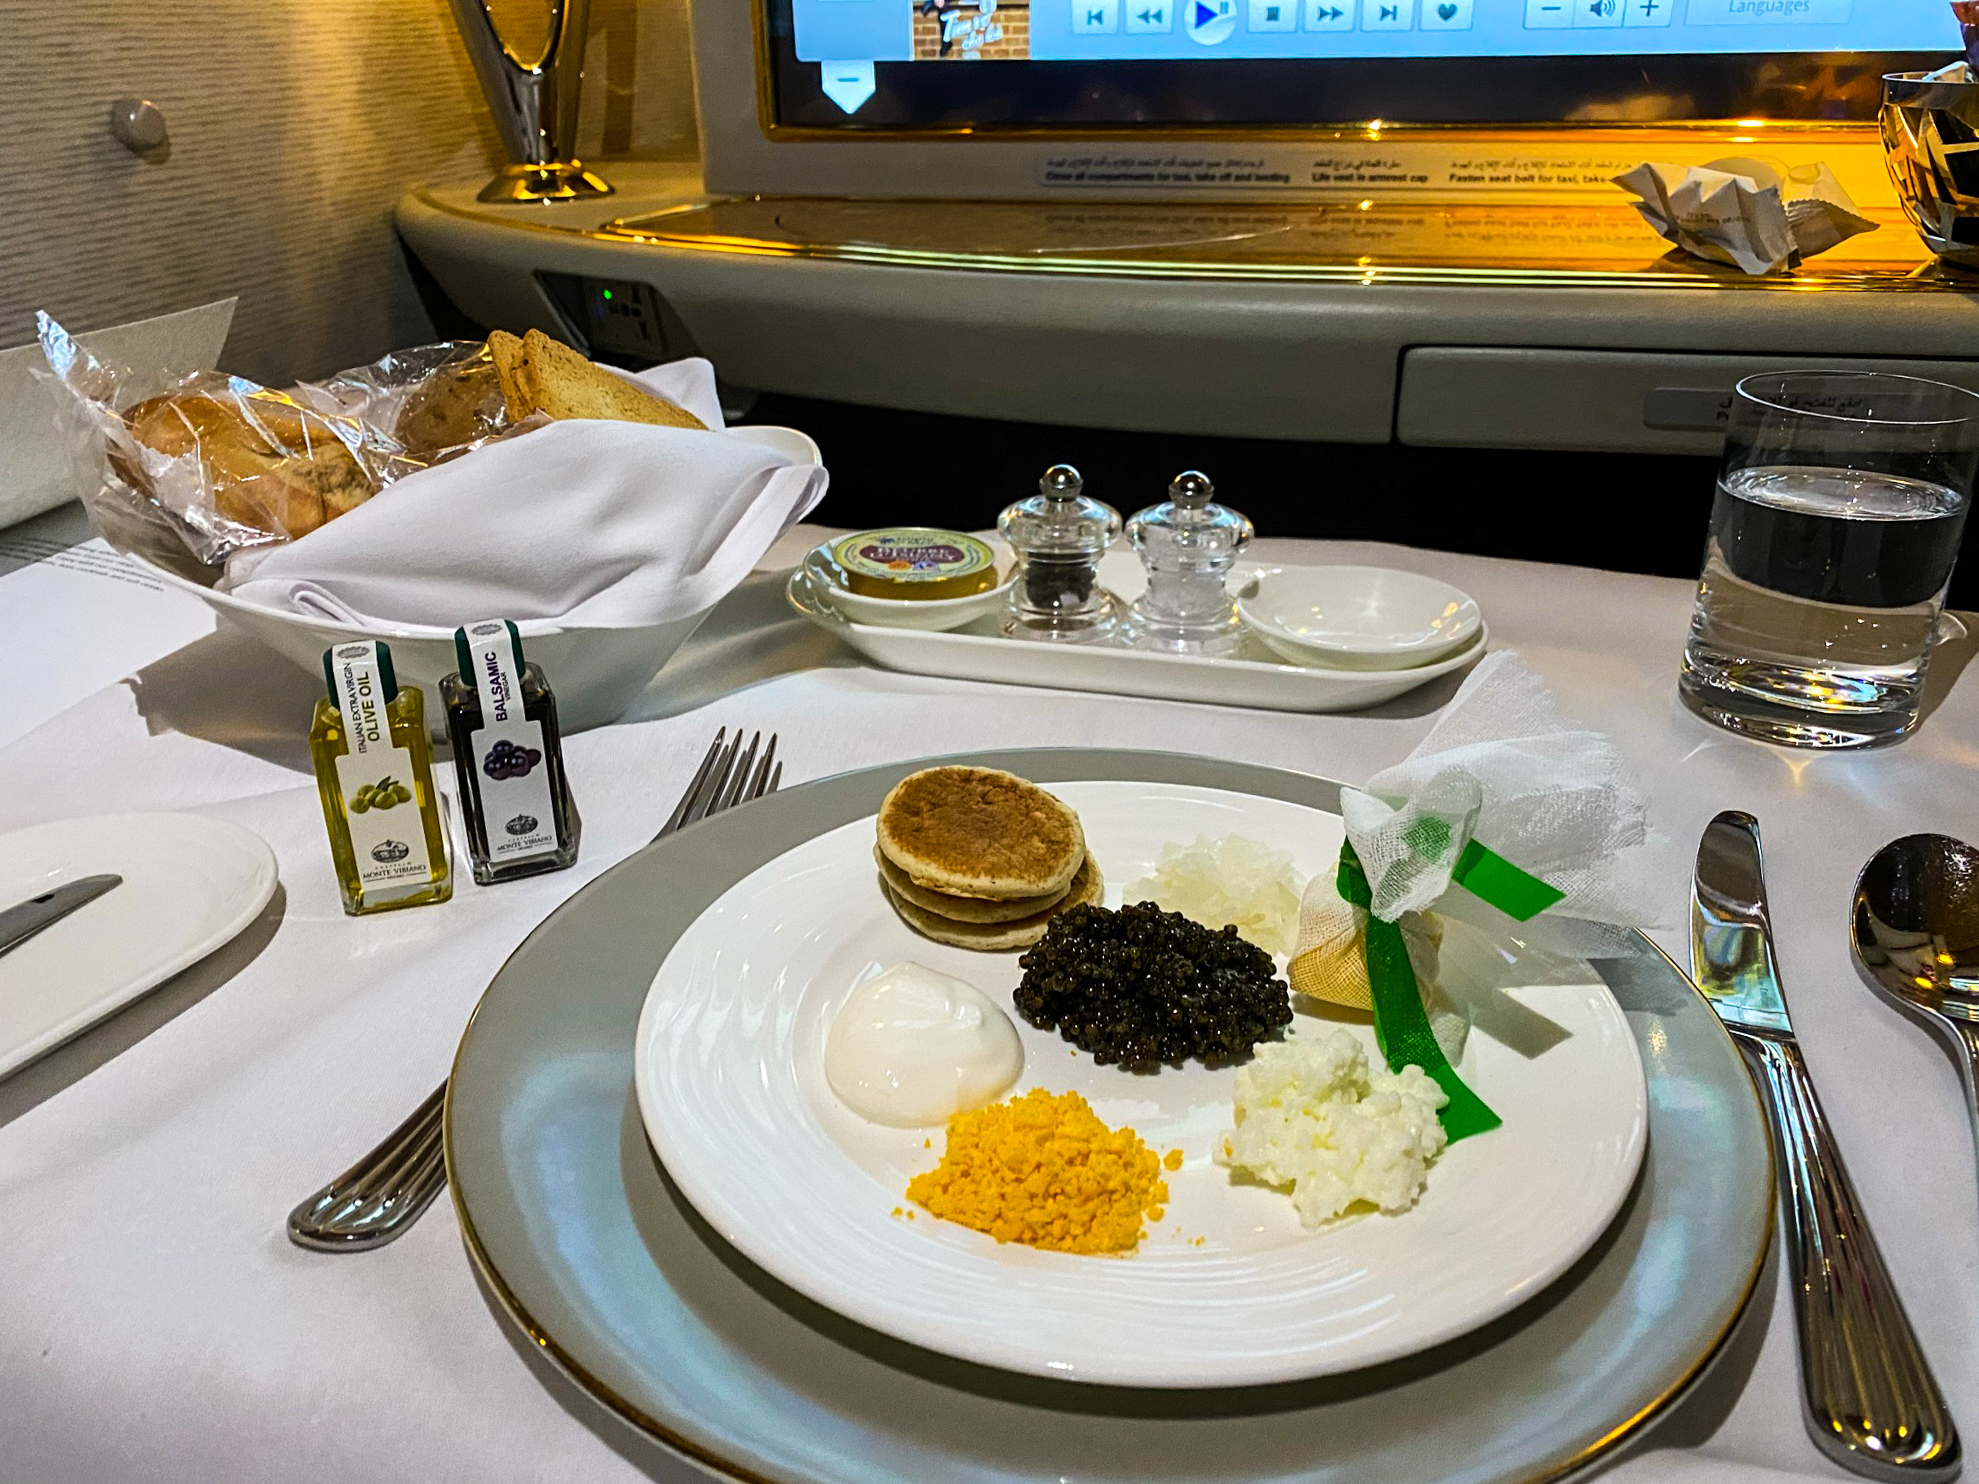 Emirates 777 First Class Caviar Course